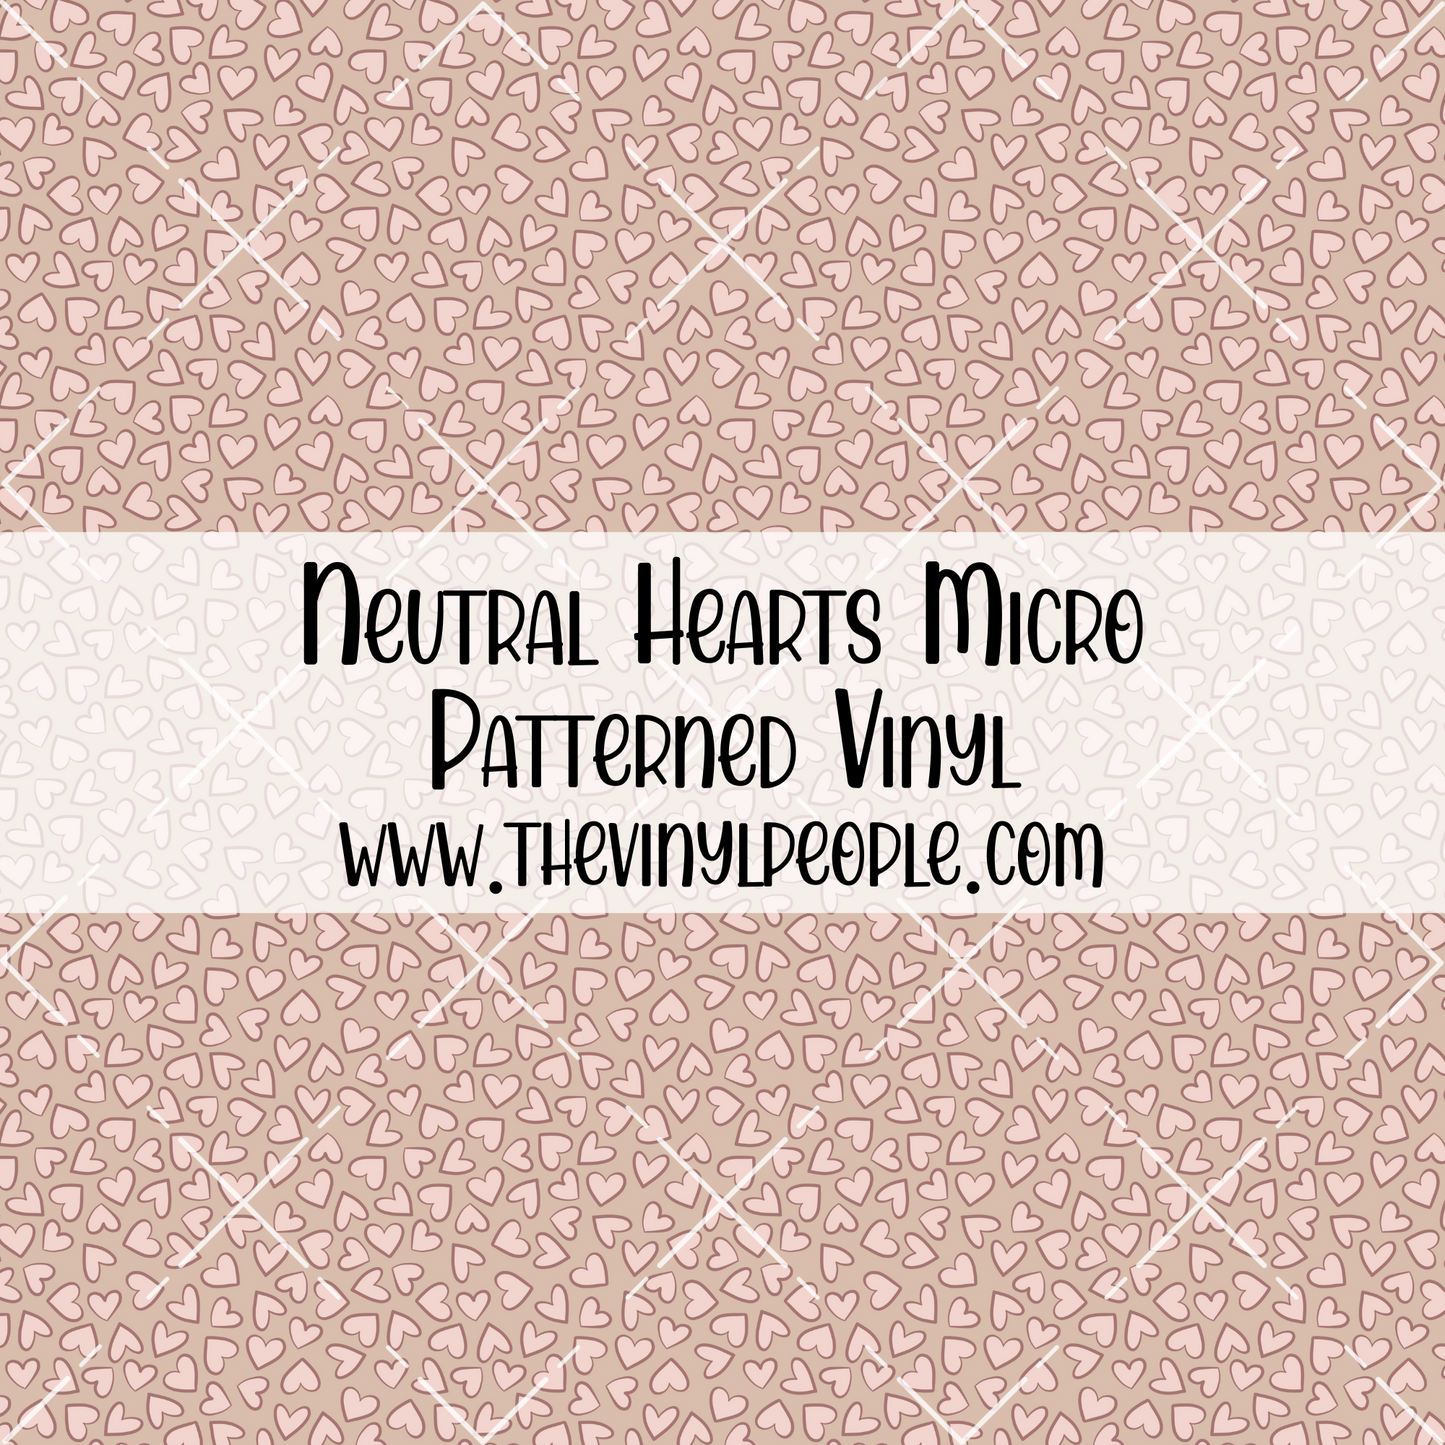 Neutral Hearts Patterned Vinyl